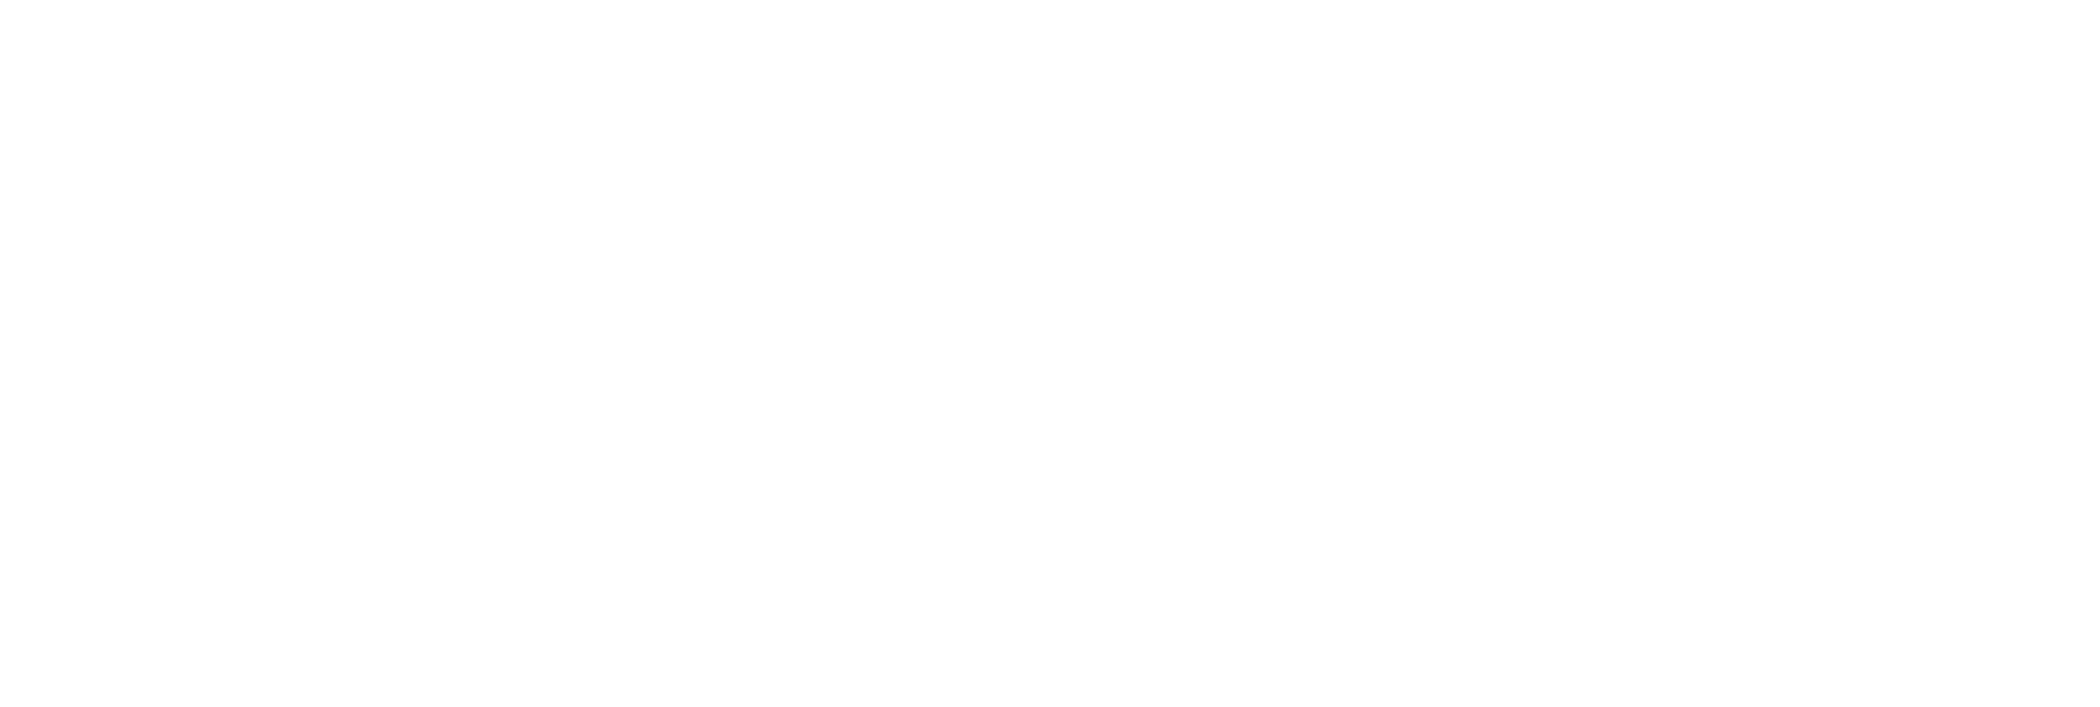 Custom Design | Creative Design Agency